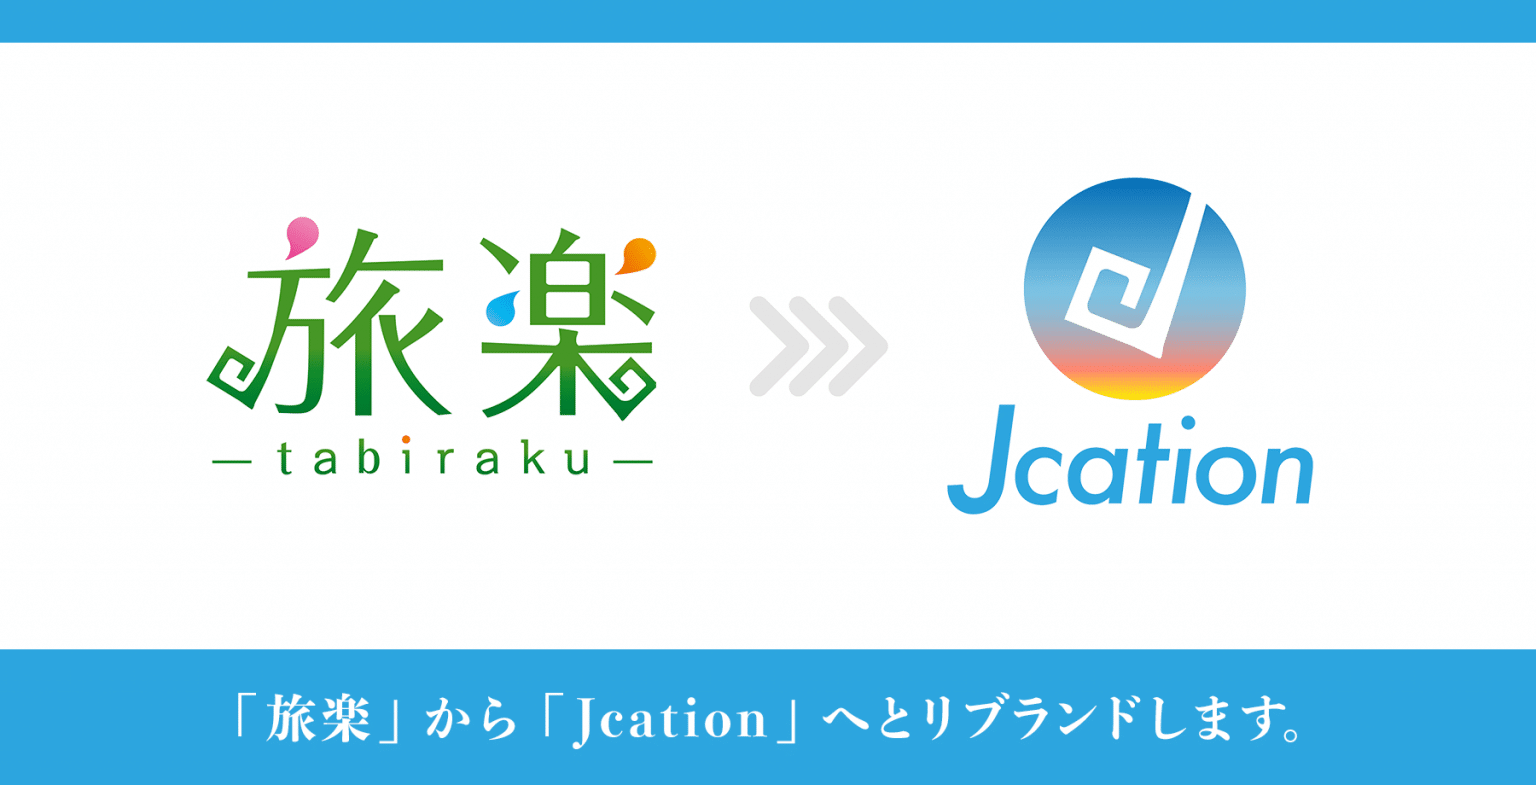 tabiraku × Jcation